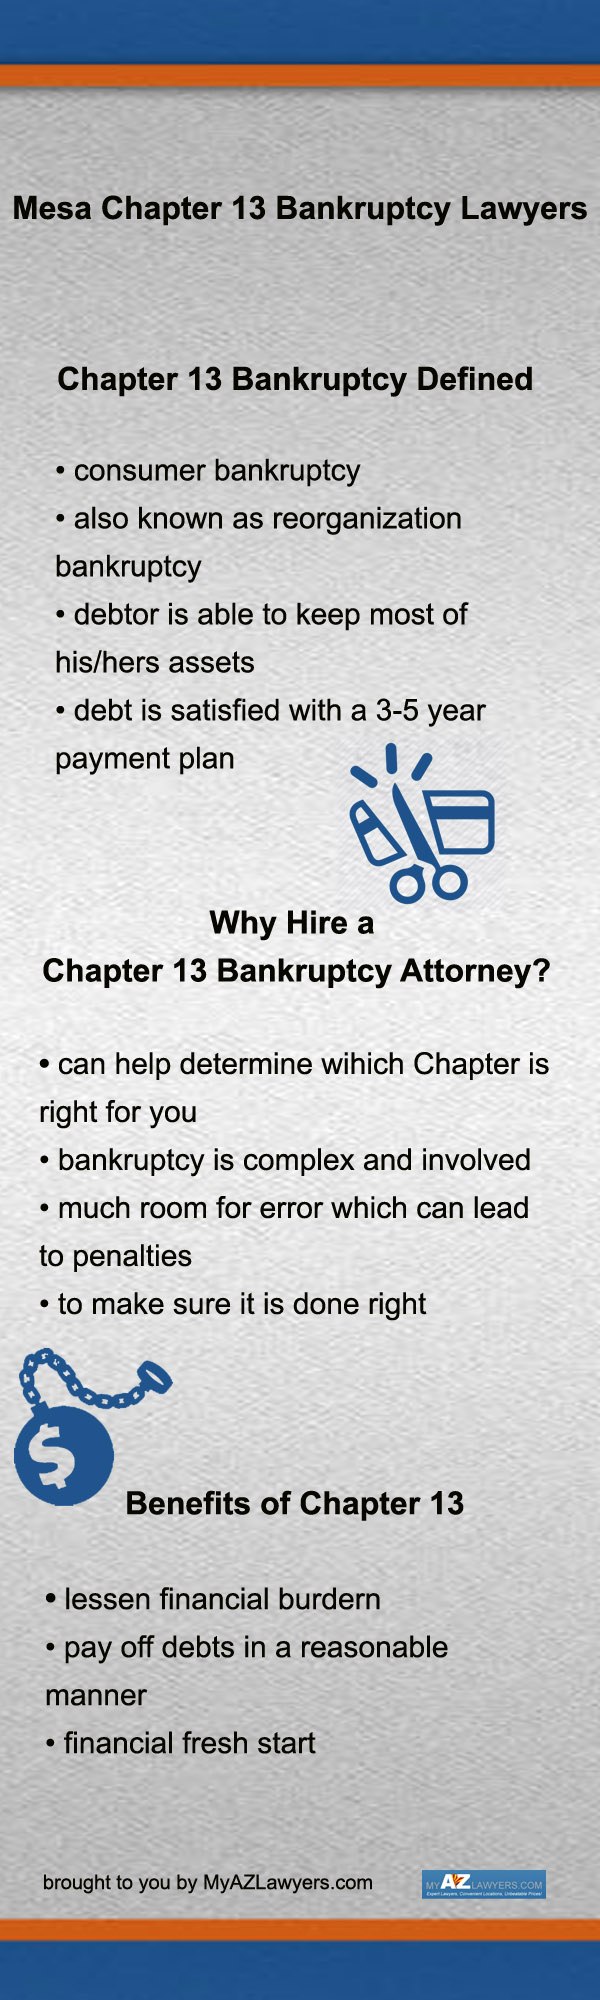 mesa chapter 13 bankruptcy lawyer | my az lawyers